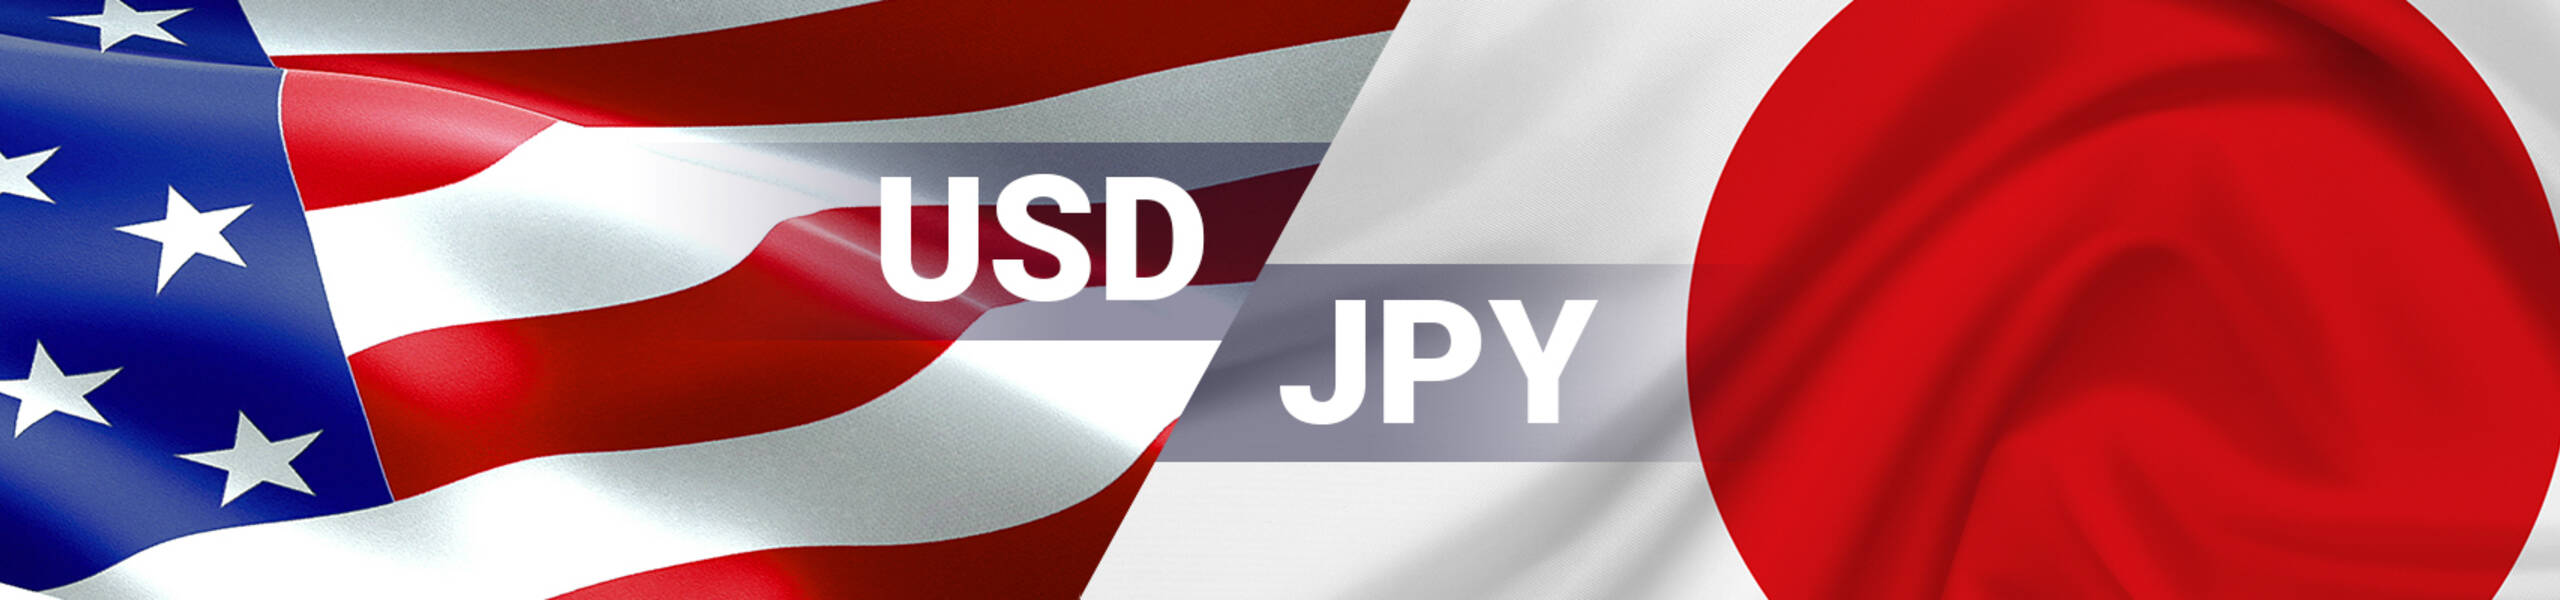 USD/JPY: dollar supported by Senkou Span B